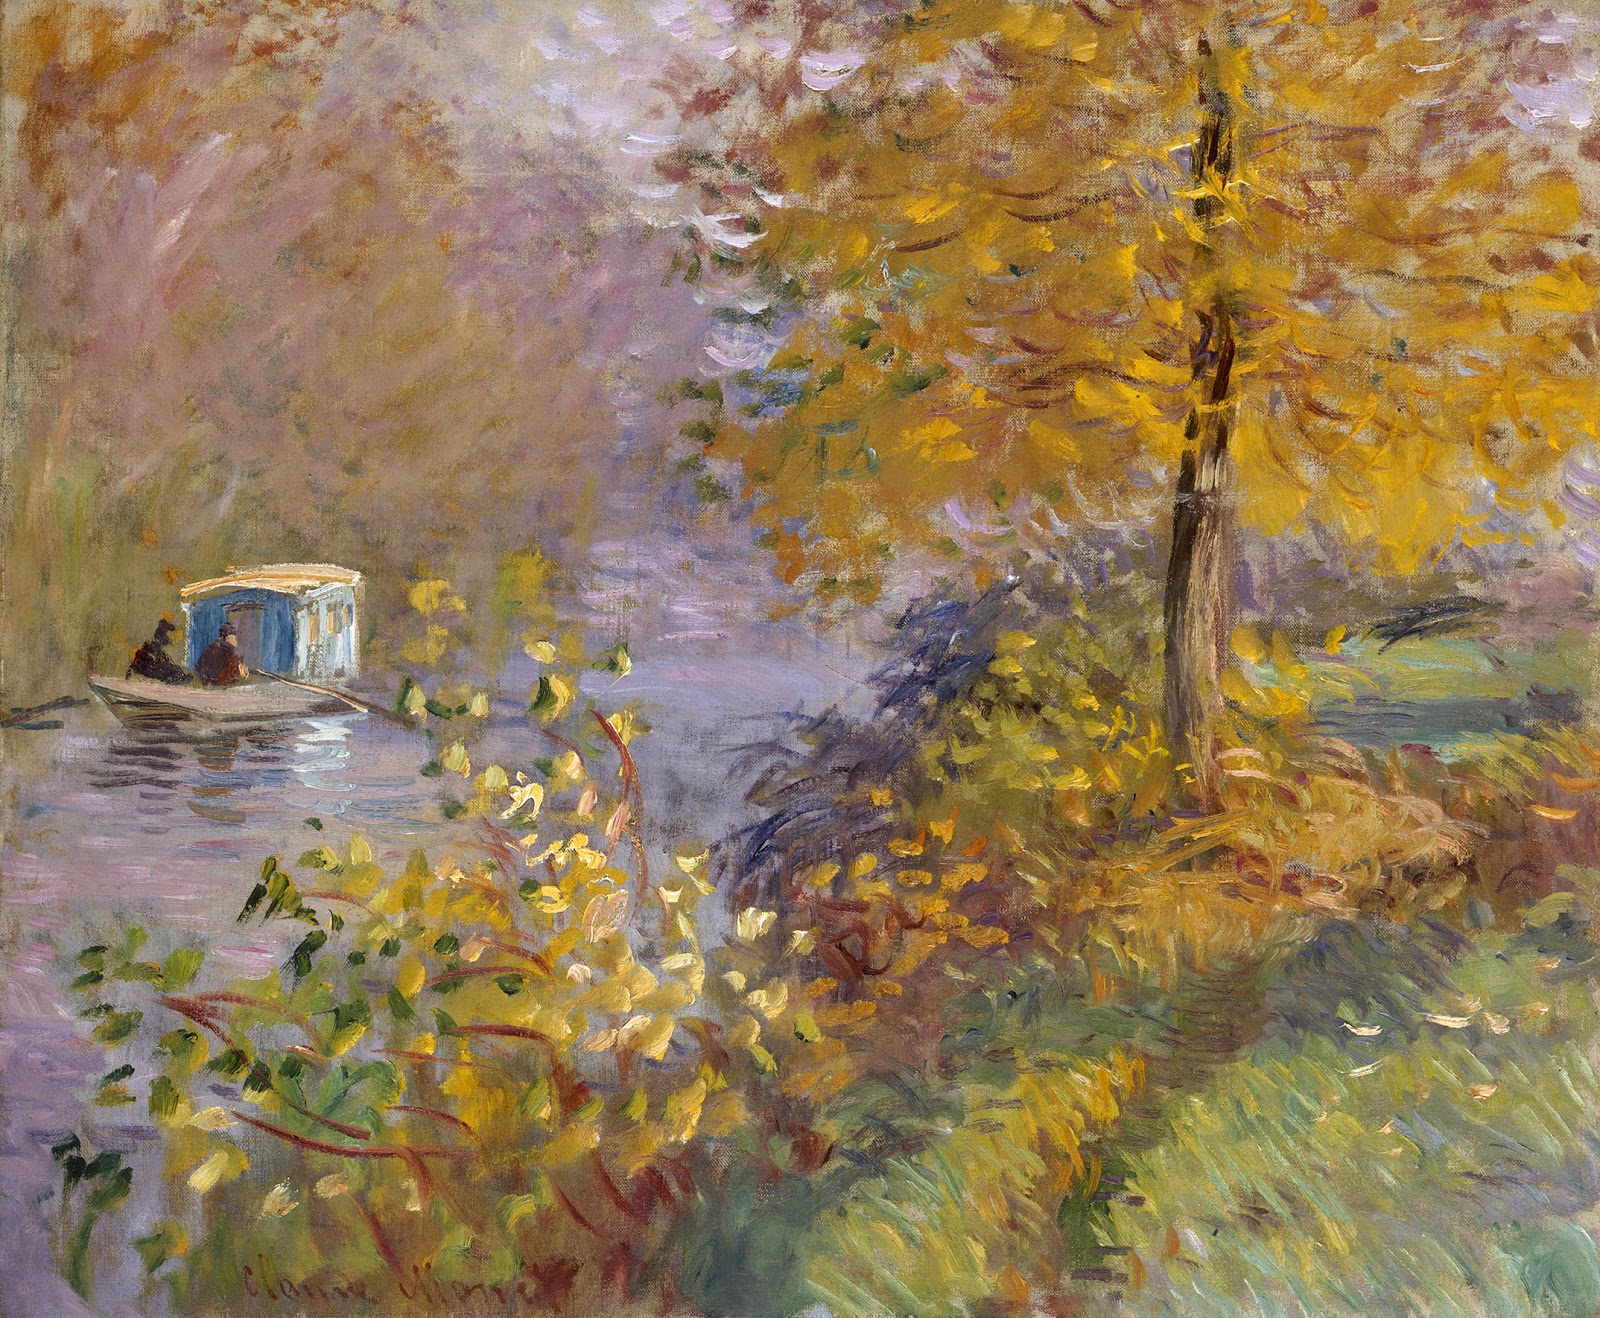 Claude+Monet-1840-1926 (826).jpg